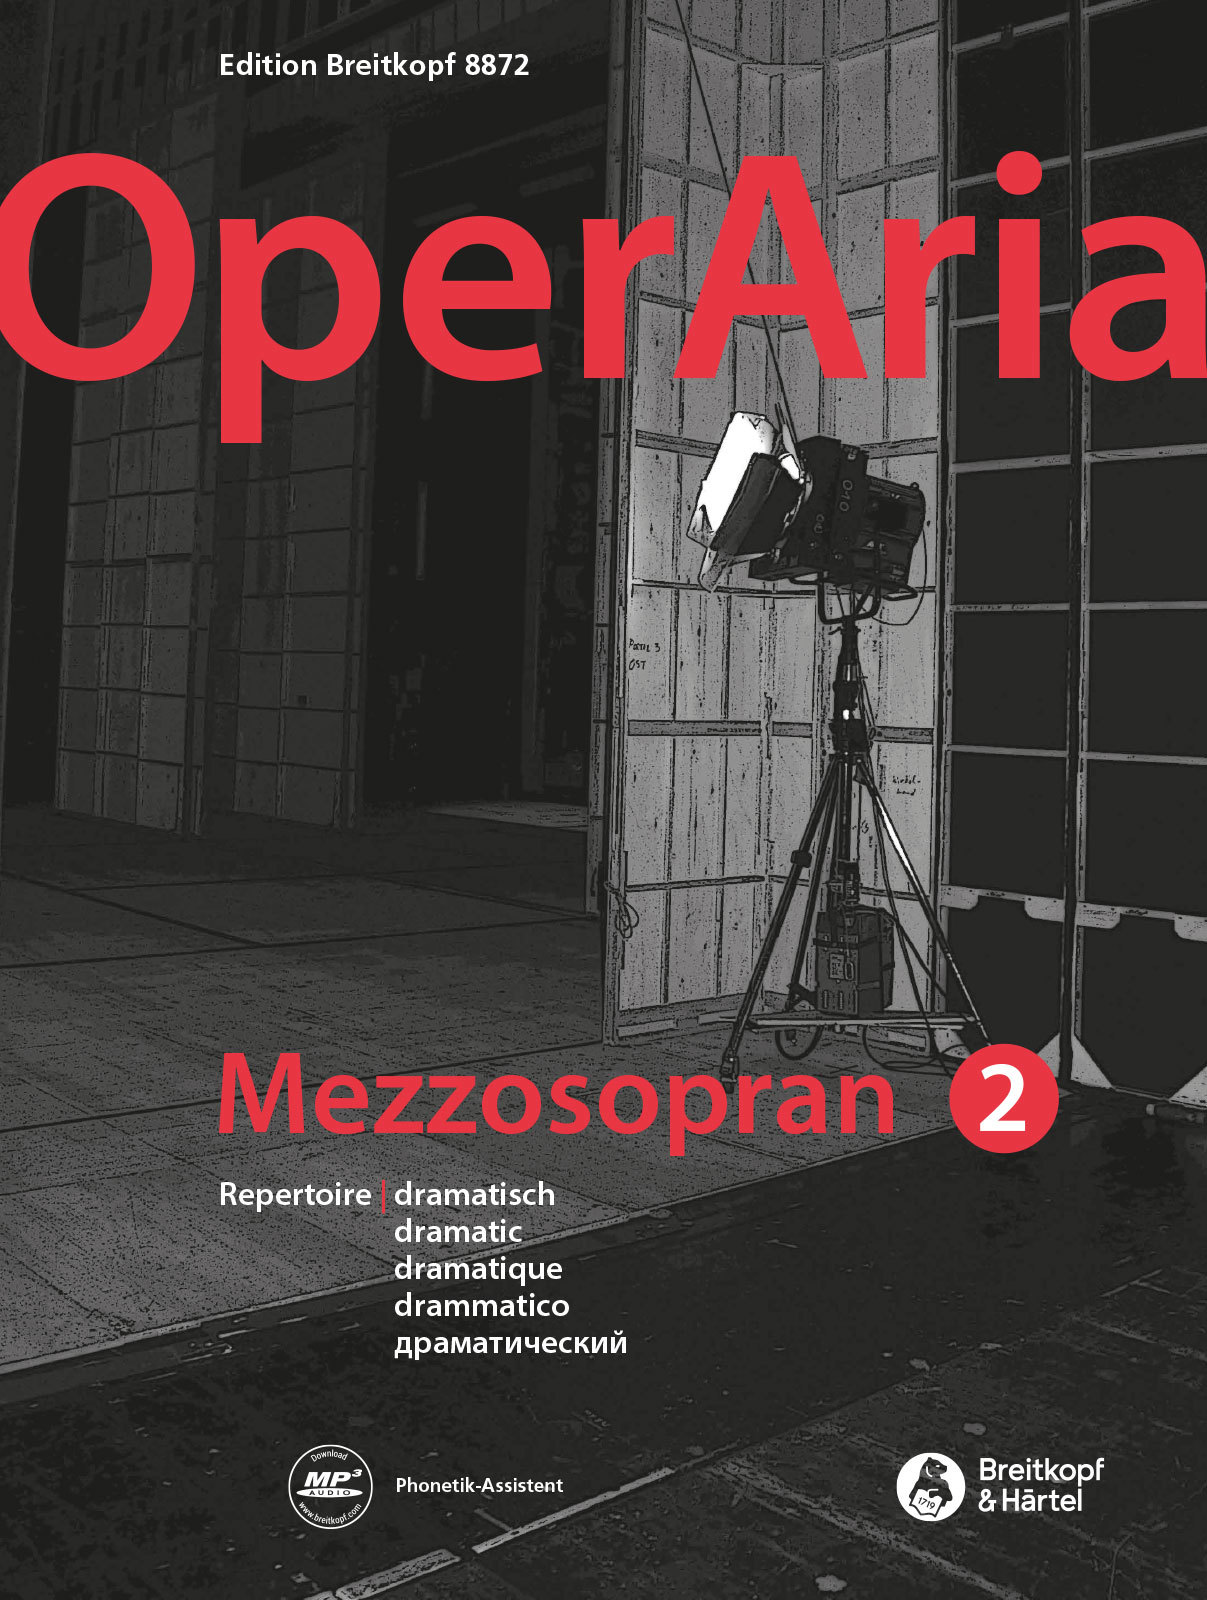 Operaria Mezzosoprano Vol 2 Dramatic Repertoire Sheet Music Songbook